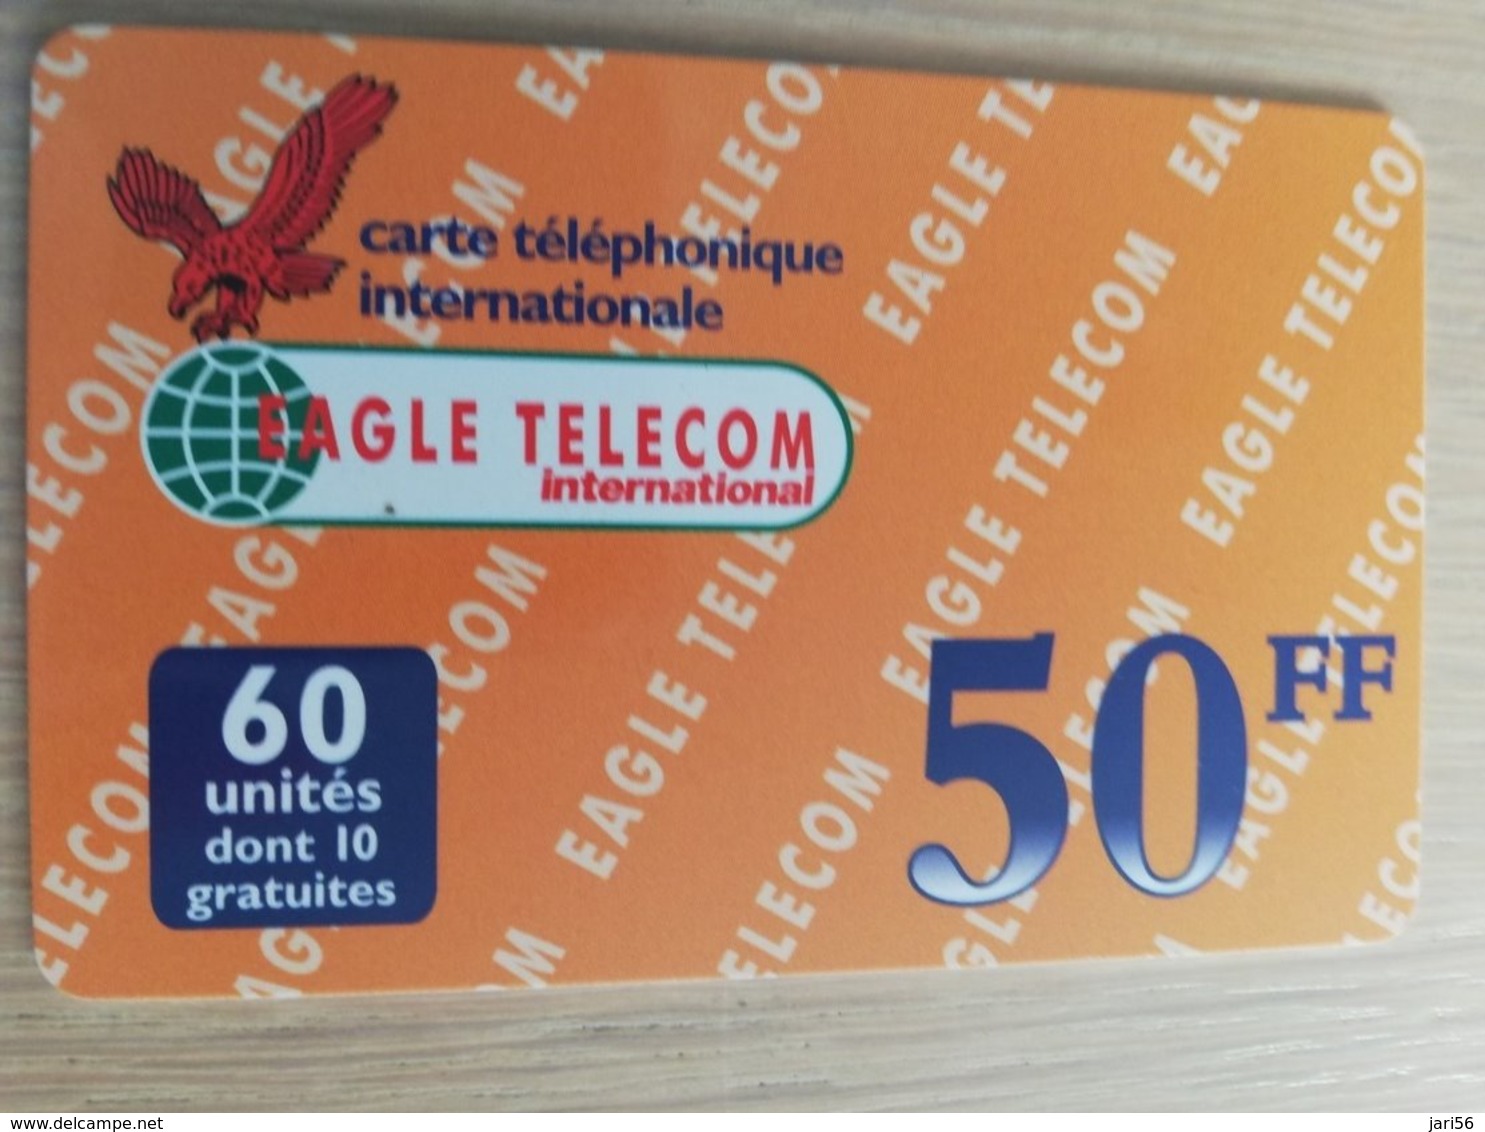 FRANCE/FRANKRIJK  EAGLE TELECOM 50FF  PREPAID  USED    ** 1499** - Mobicartes (GSM/SIM)